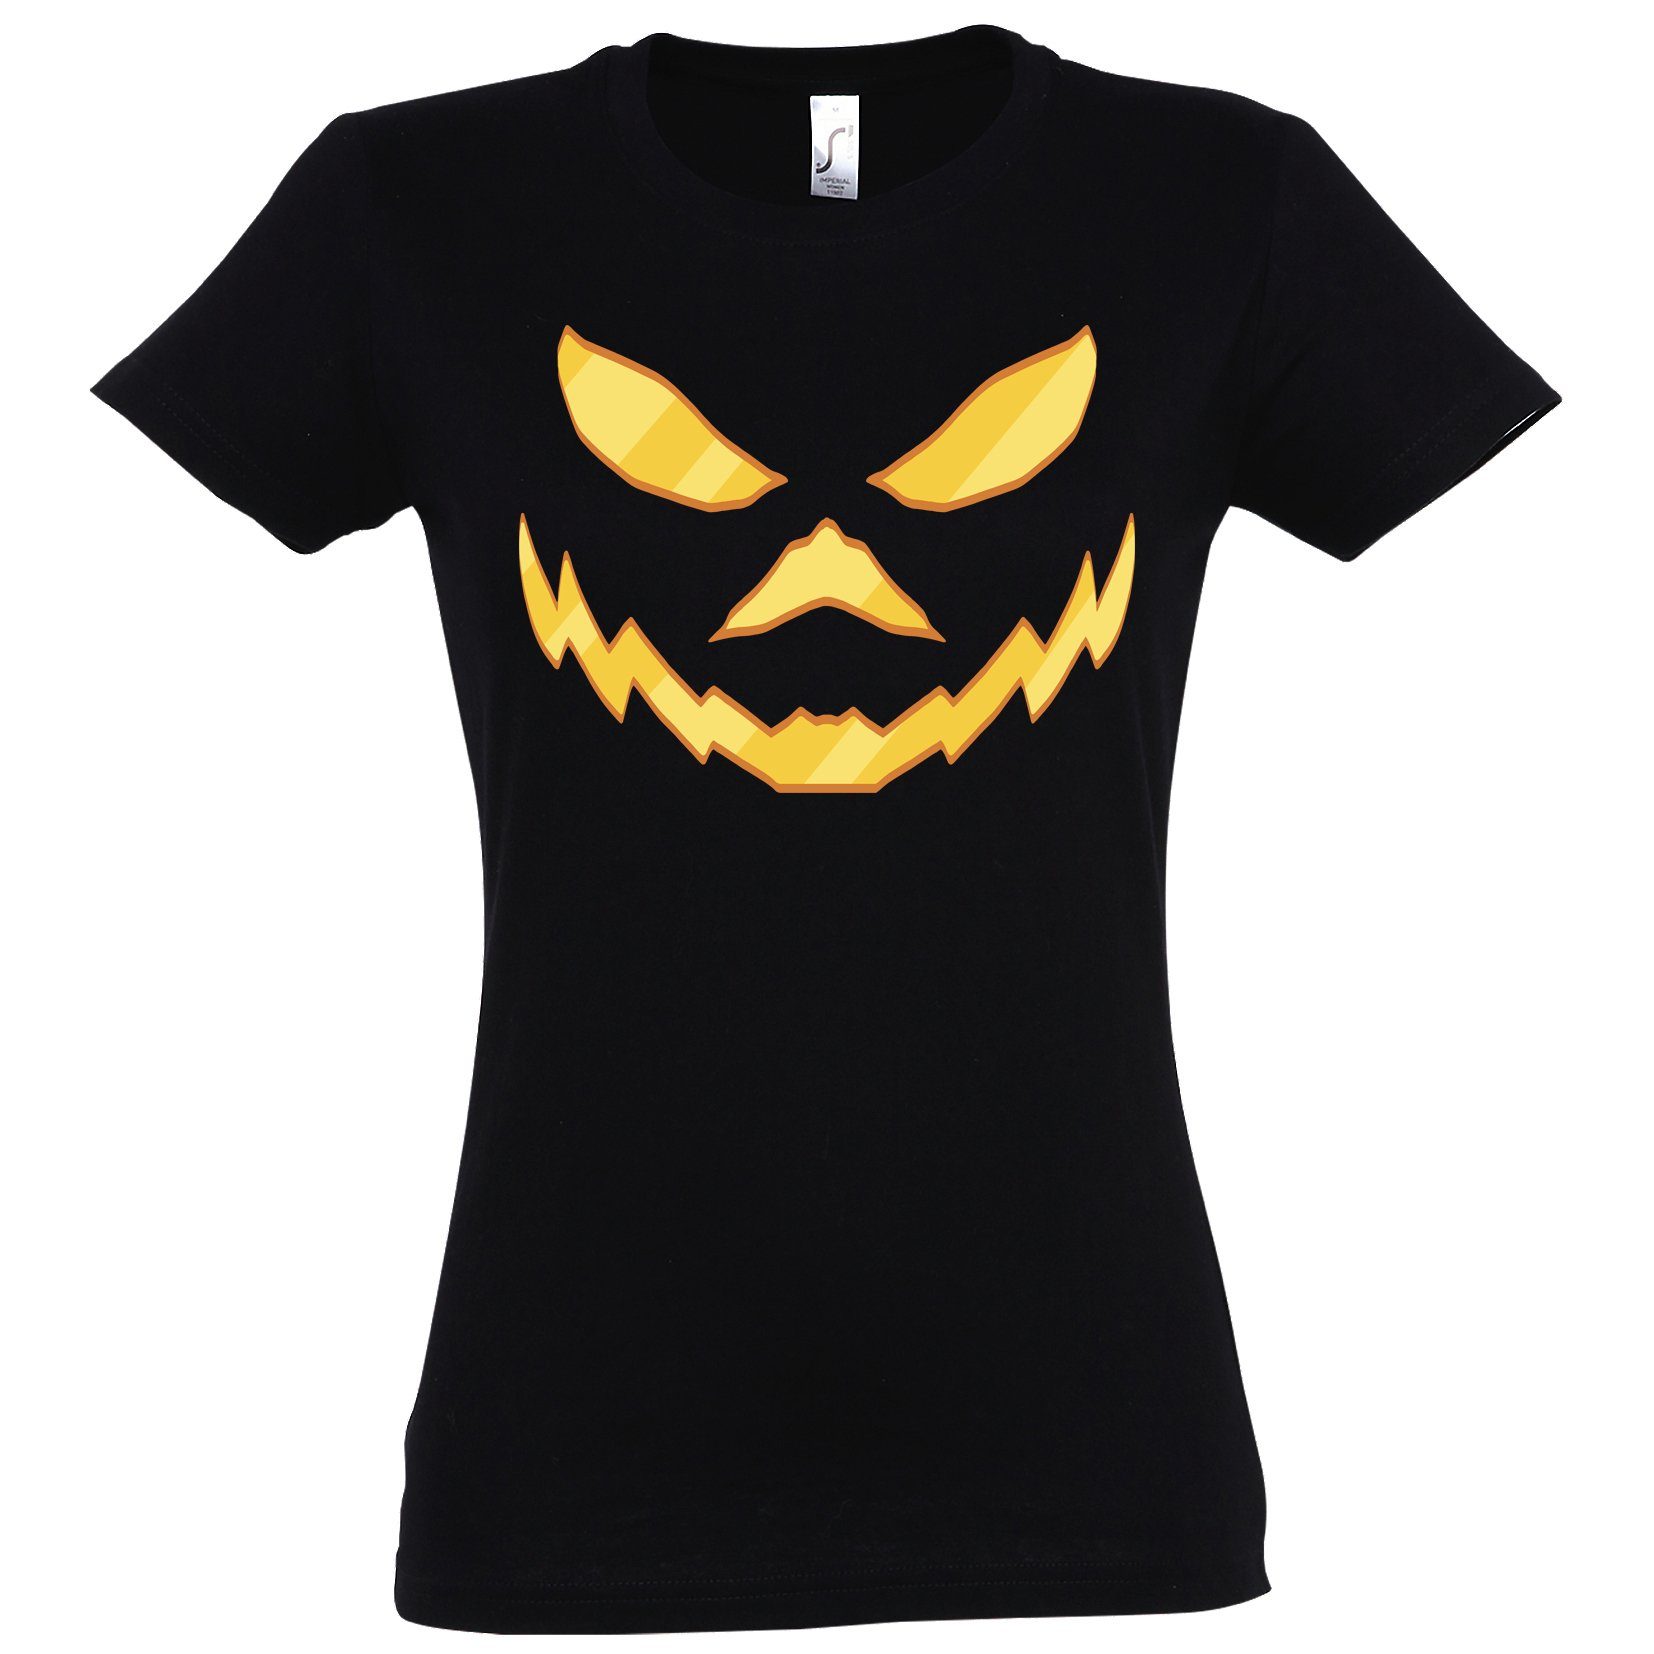 Youth Designz Print-Shirt Halloween Damen T-Shirt Horror Joker Face Fun-Look mit lustigem Aufdruck Schwarz